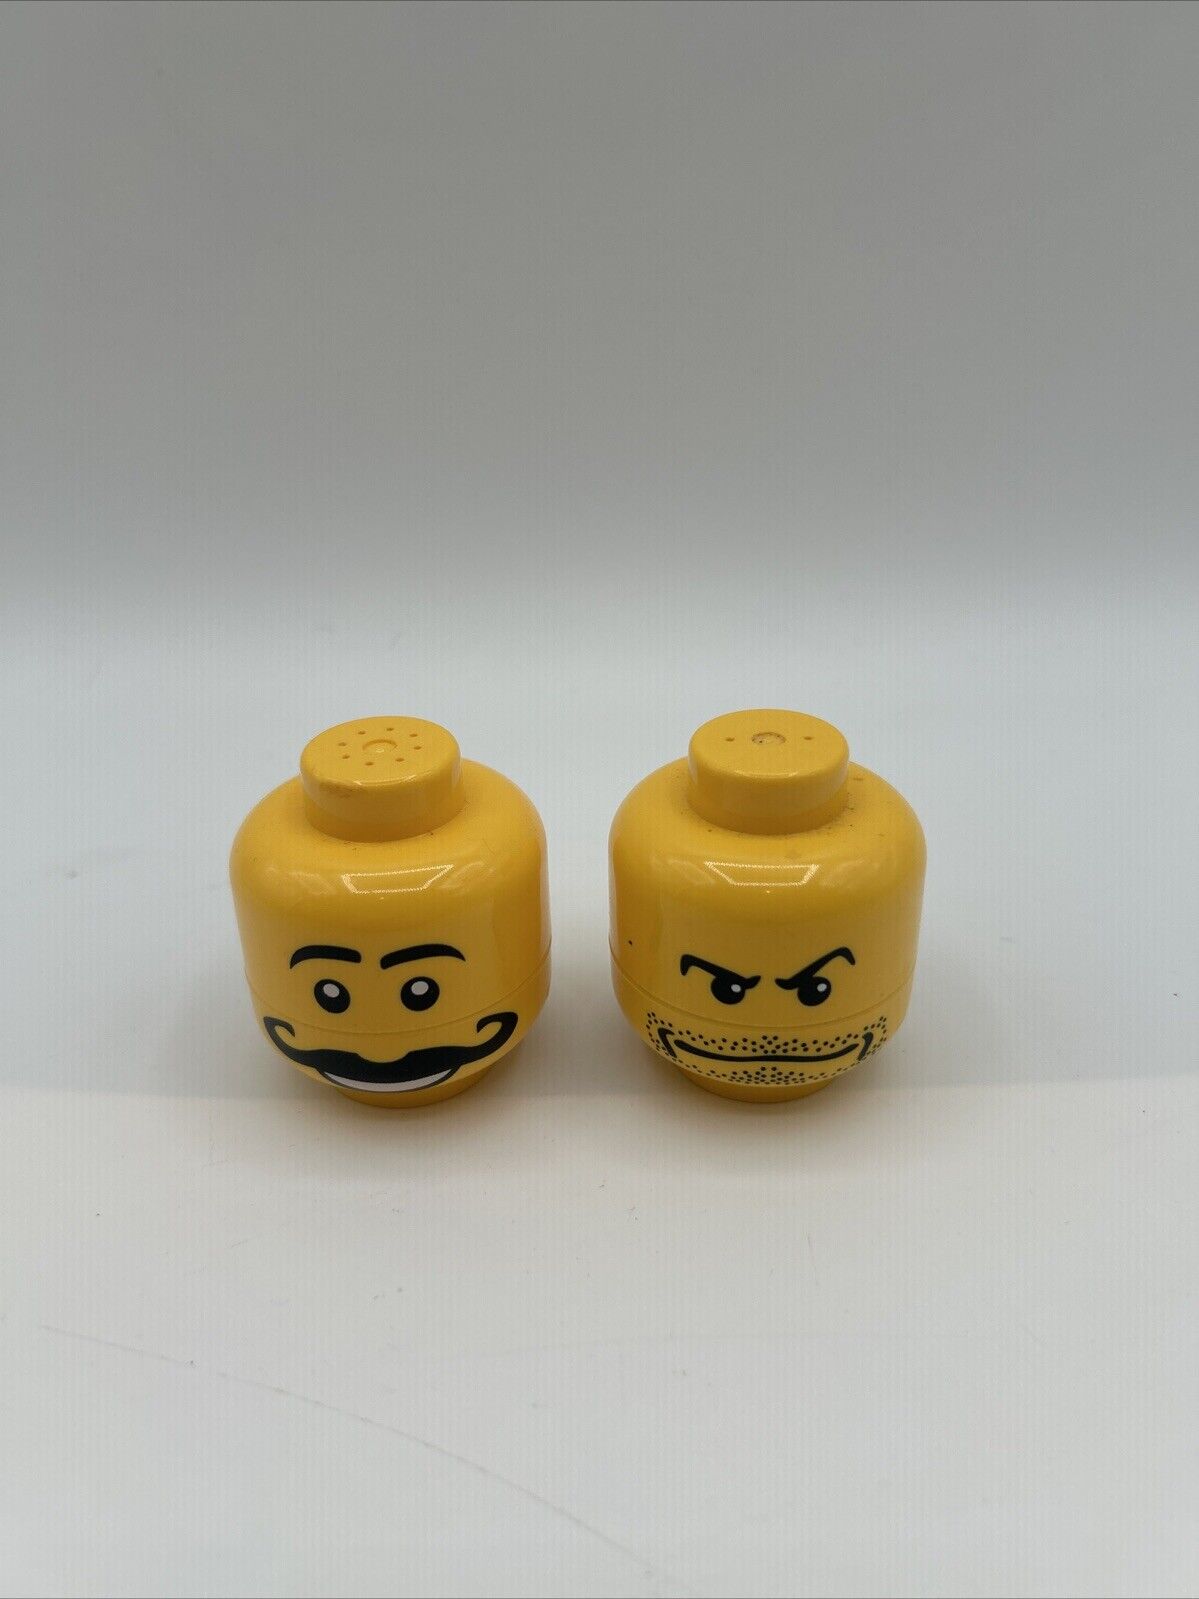 LEGO Minifigure Head Salt and Pepper Shaker Set